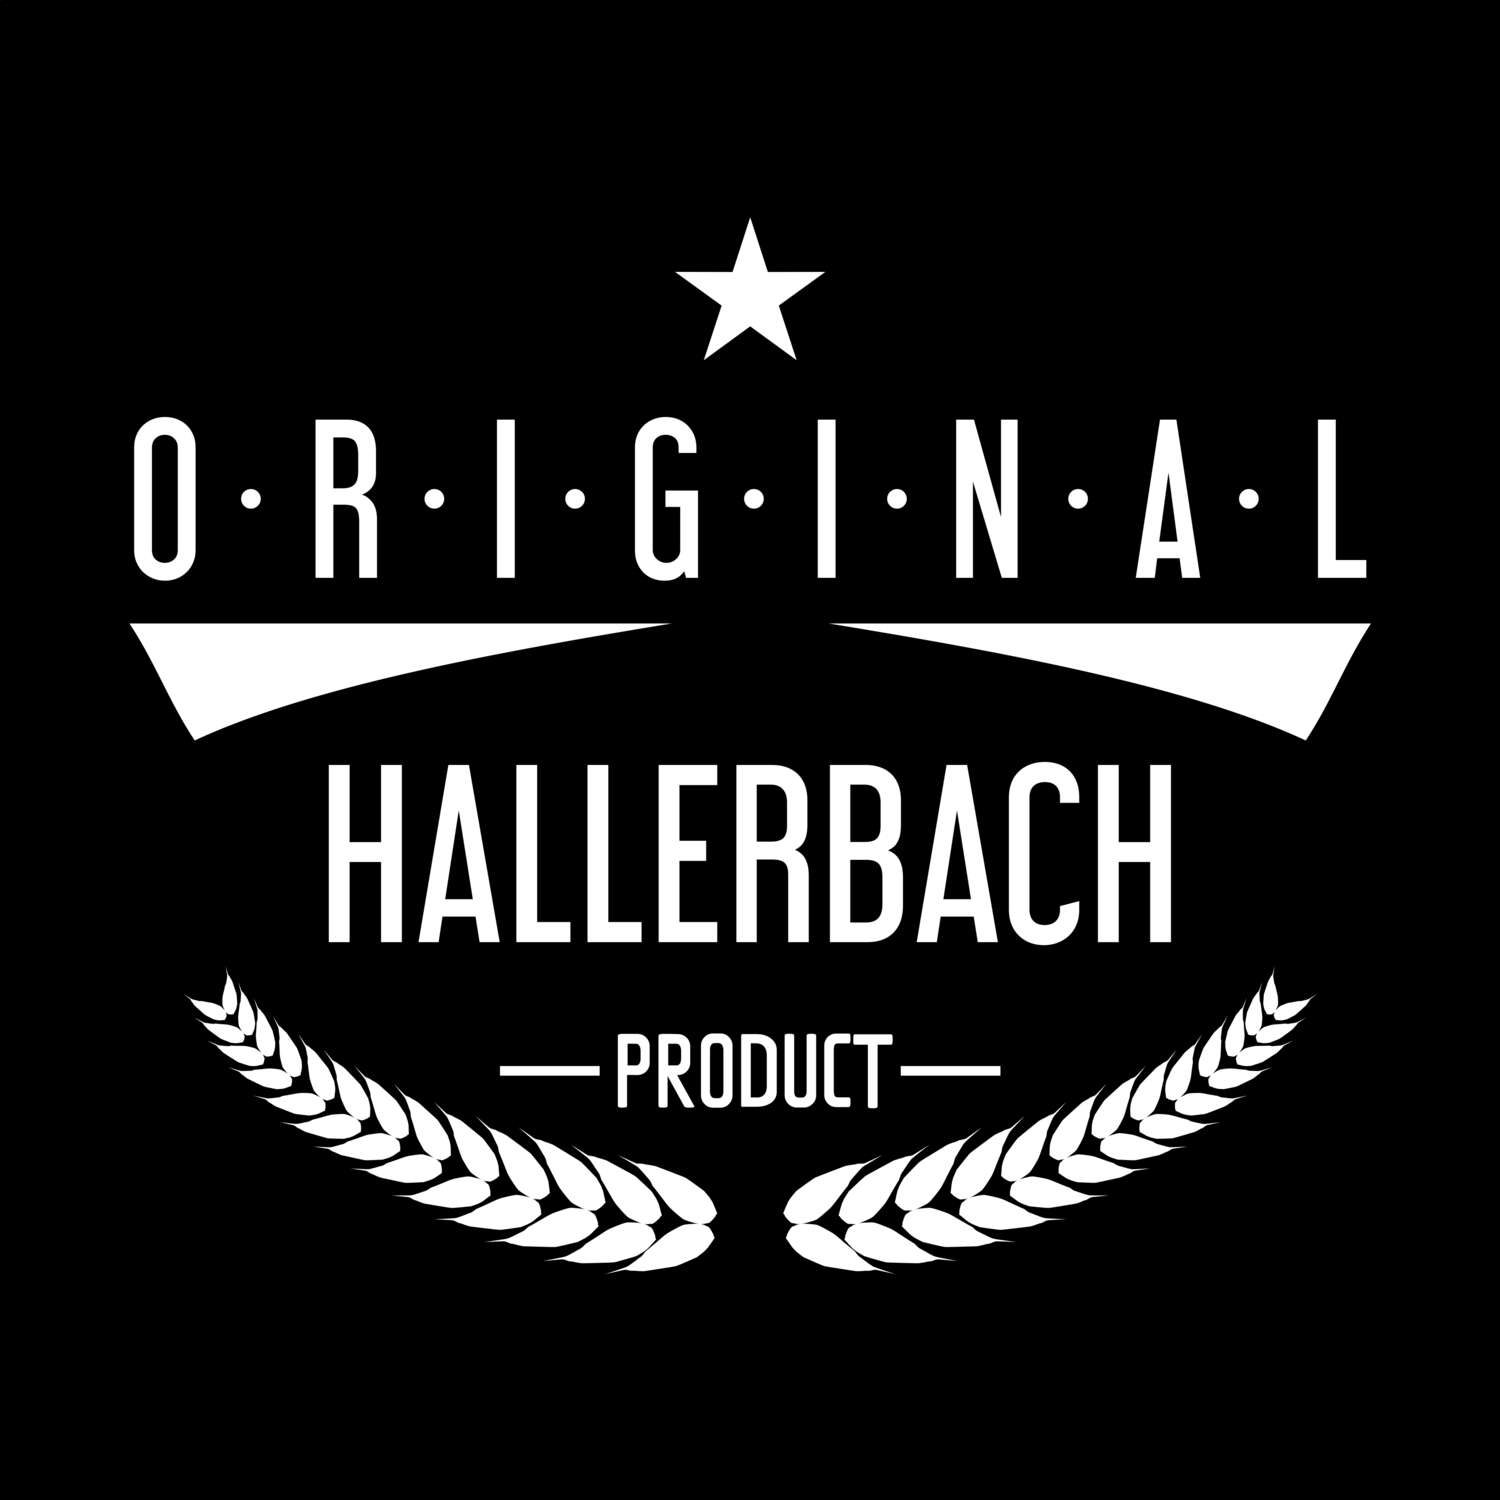 Hallerbach T-Shirt »Original Product«